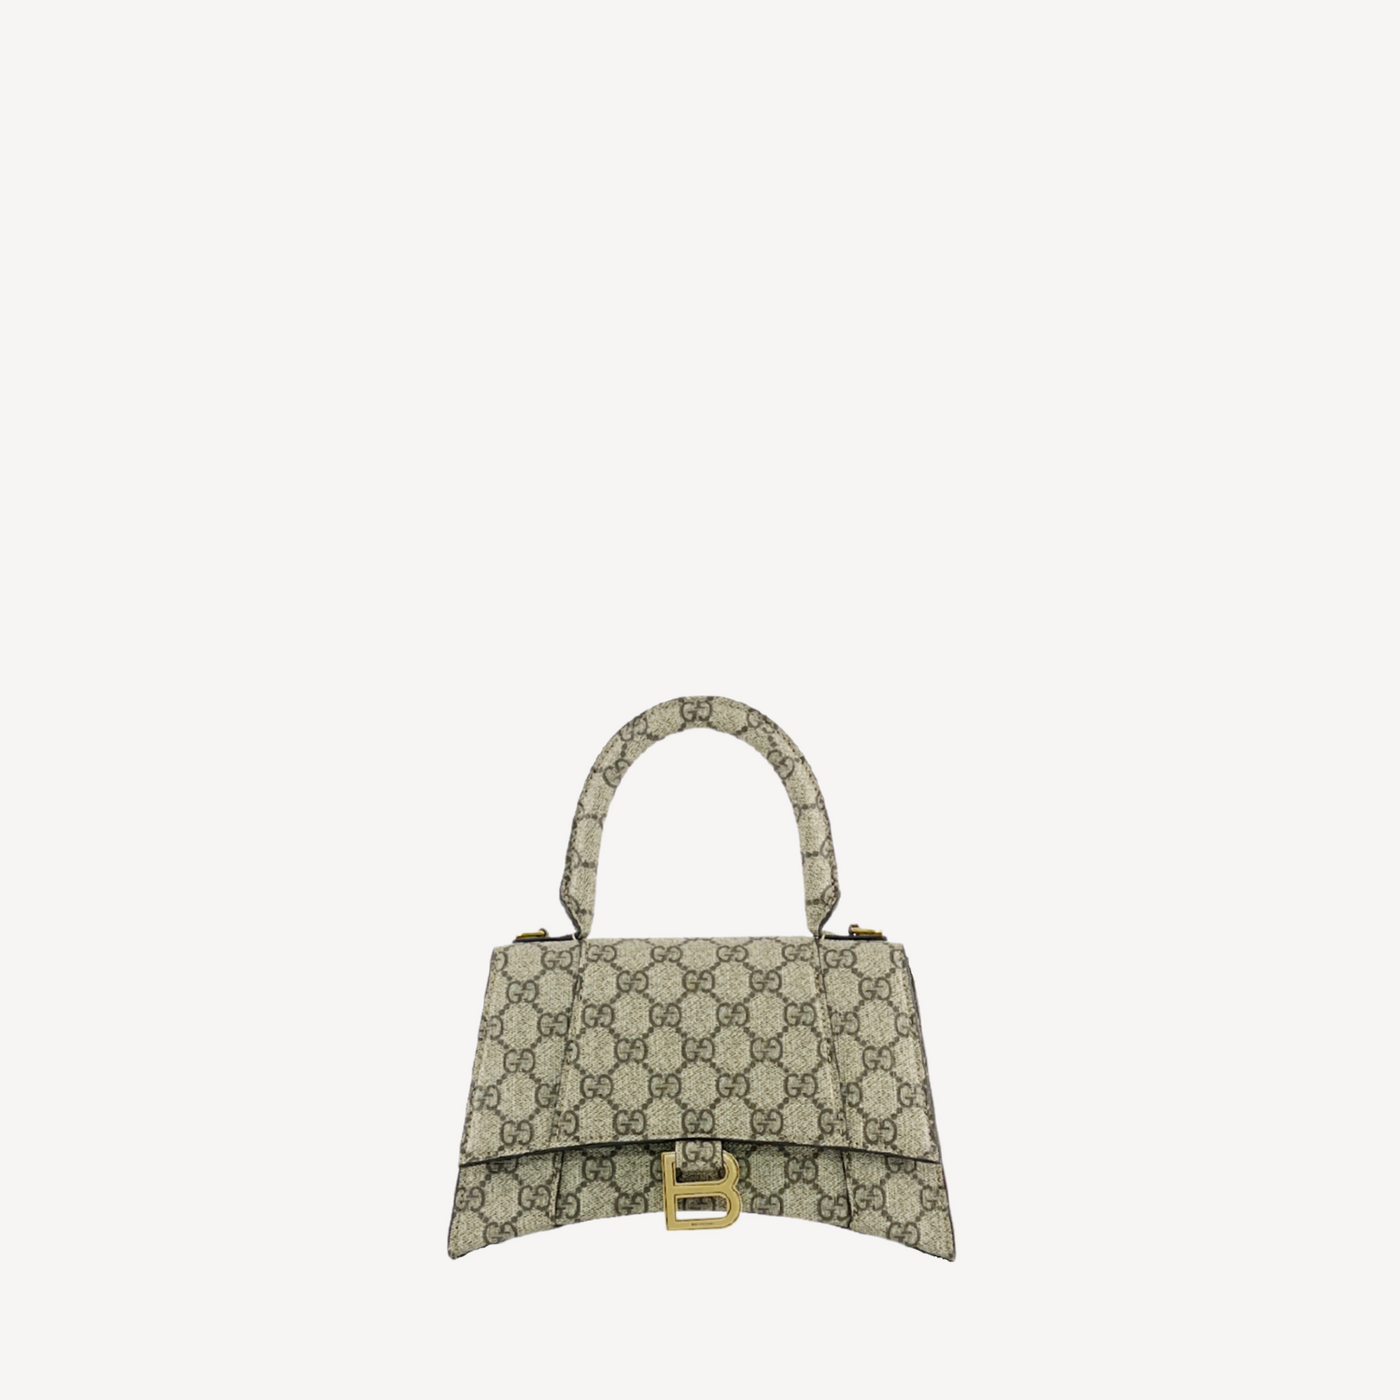 Balenciaga x Gucci Hourglass XS Top Handle Bag Limited Edition